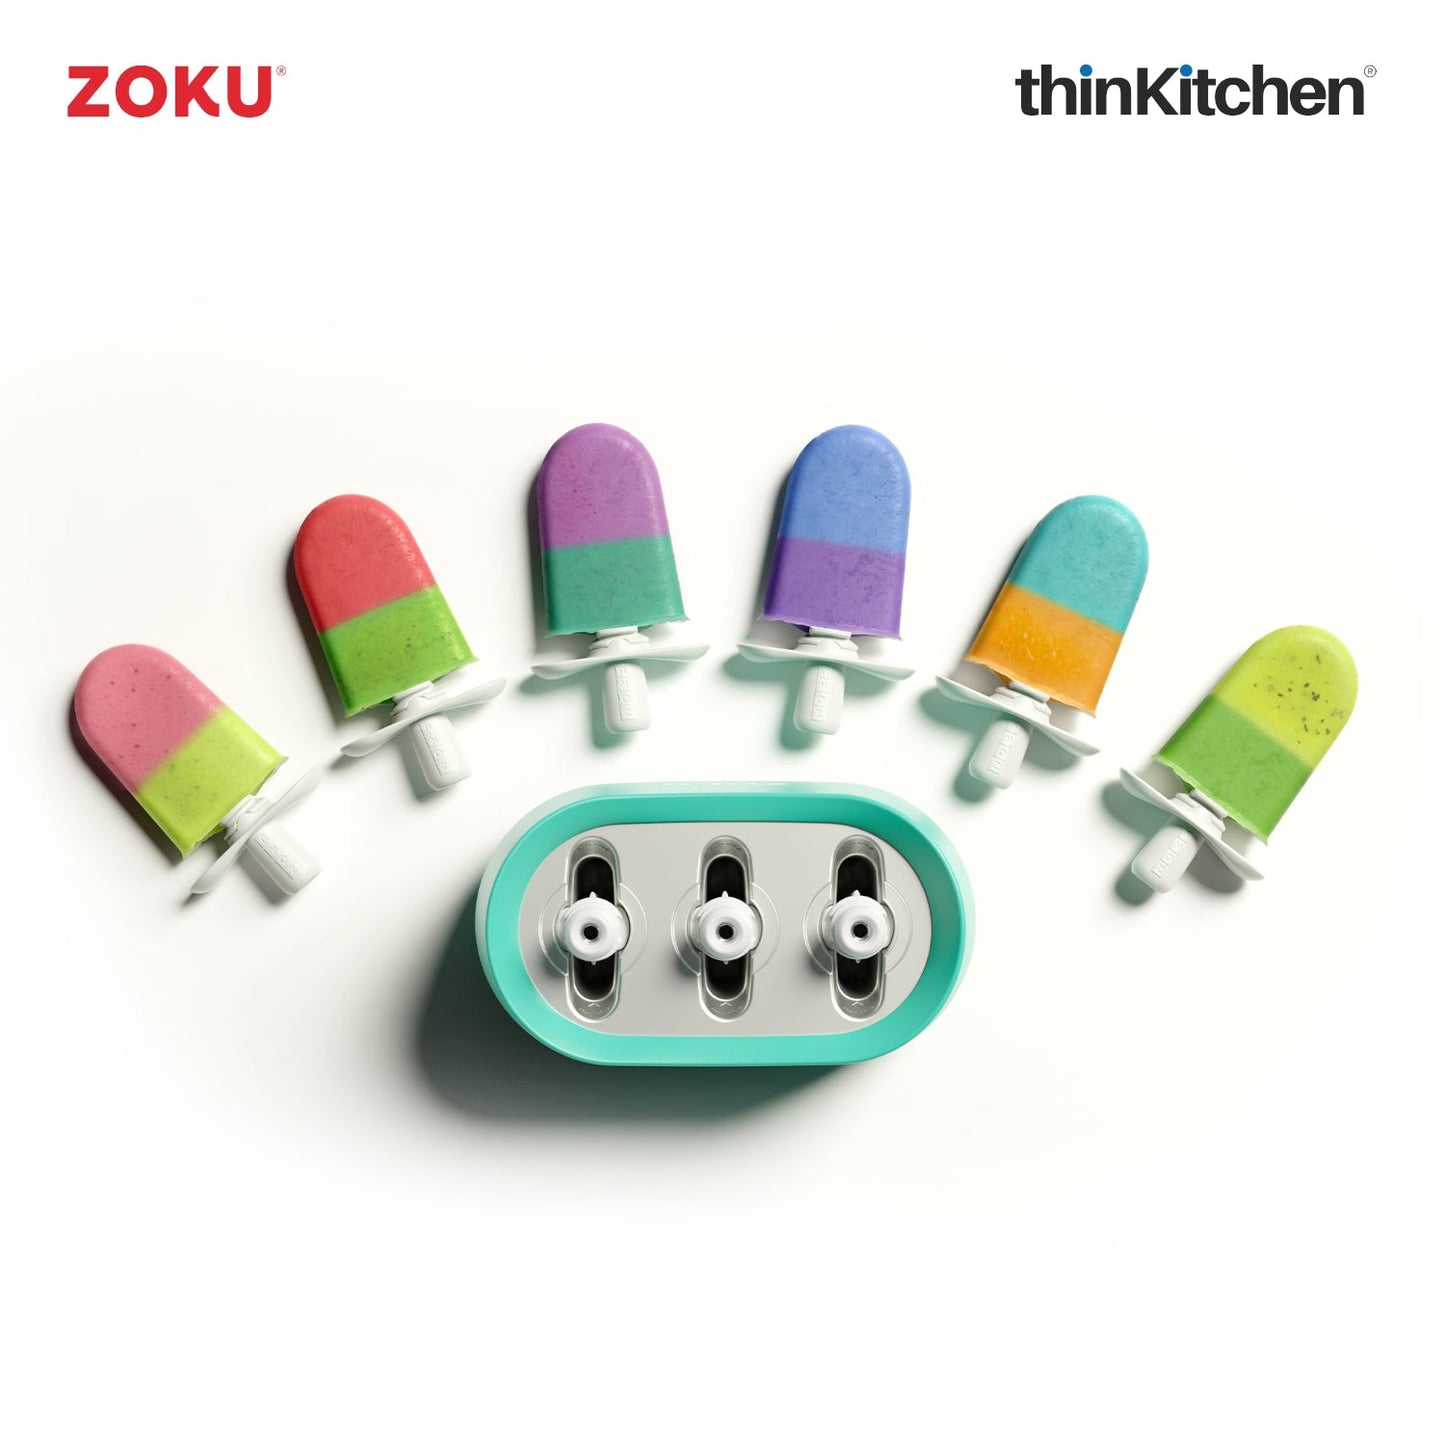 thinKitchen™ Zoku Quick Pop Maker, 60ml per pop